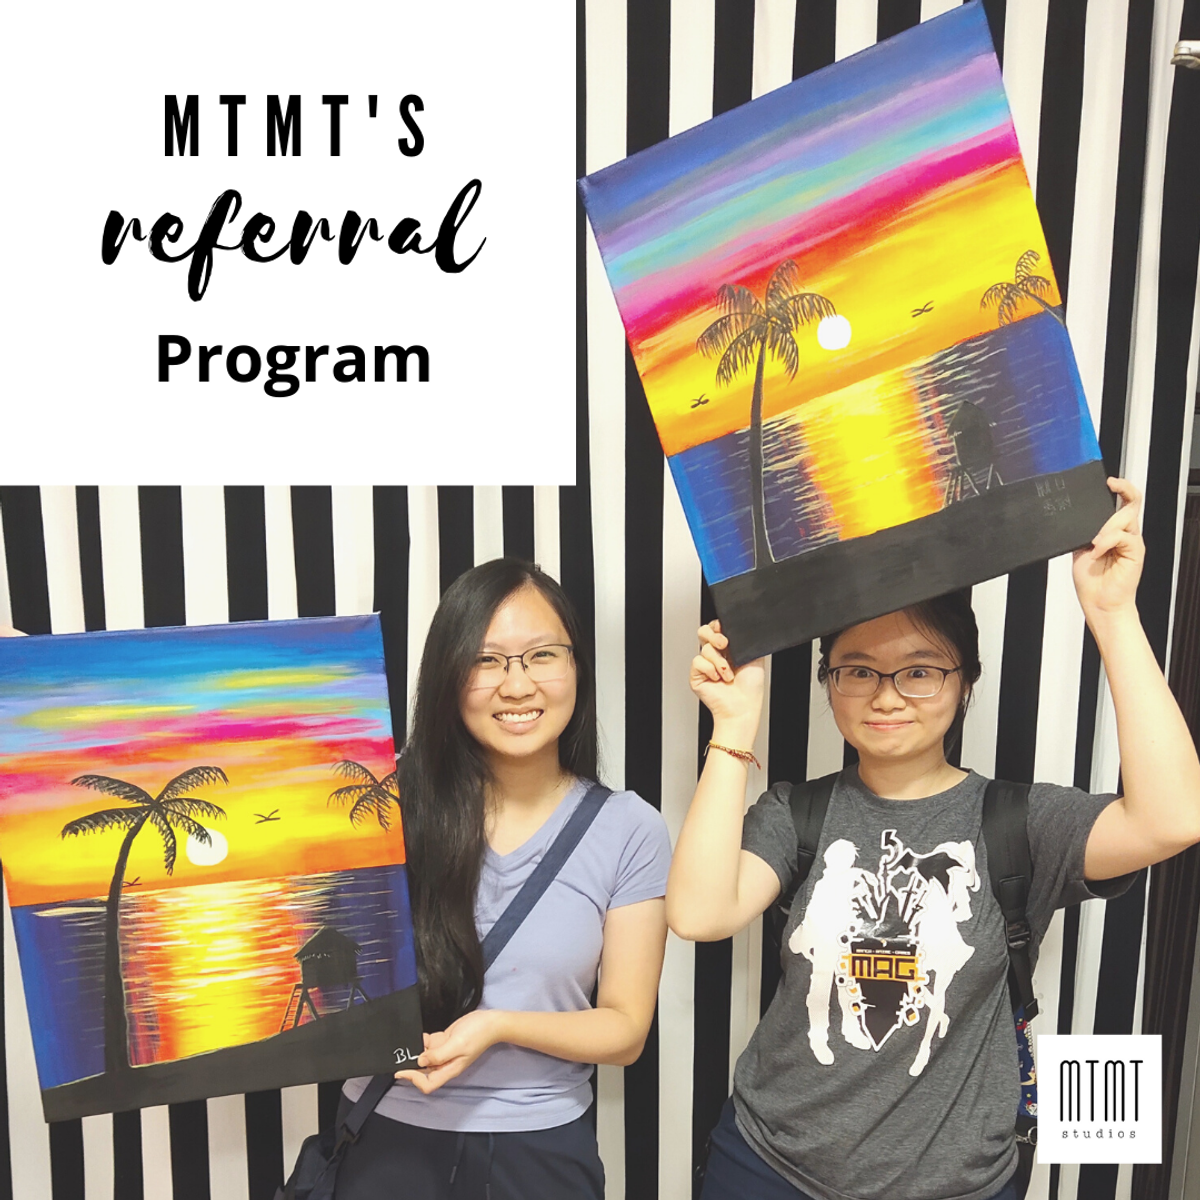 MTMT Studios Referral Program